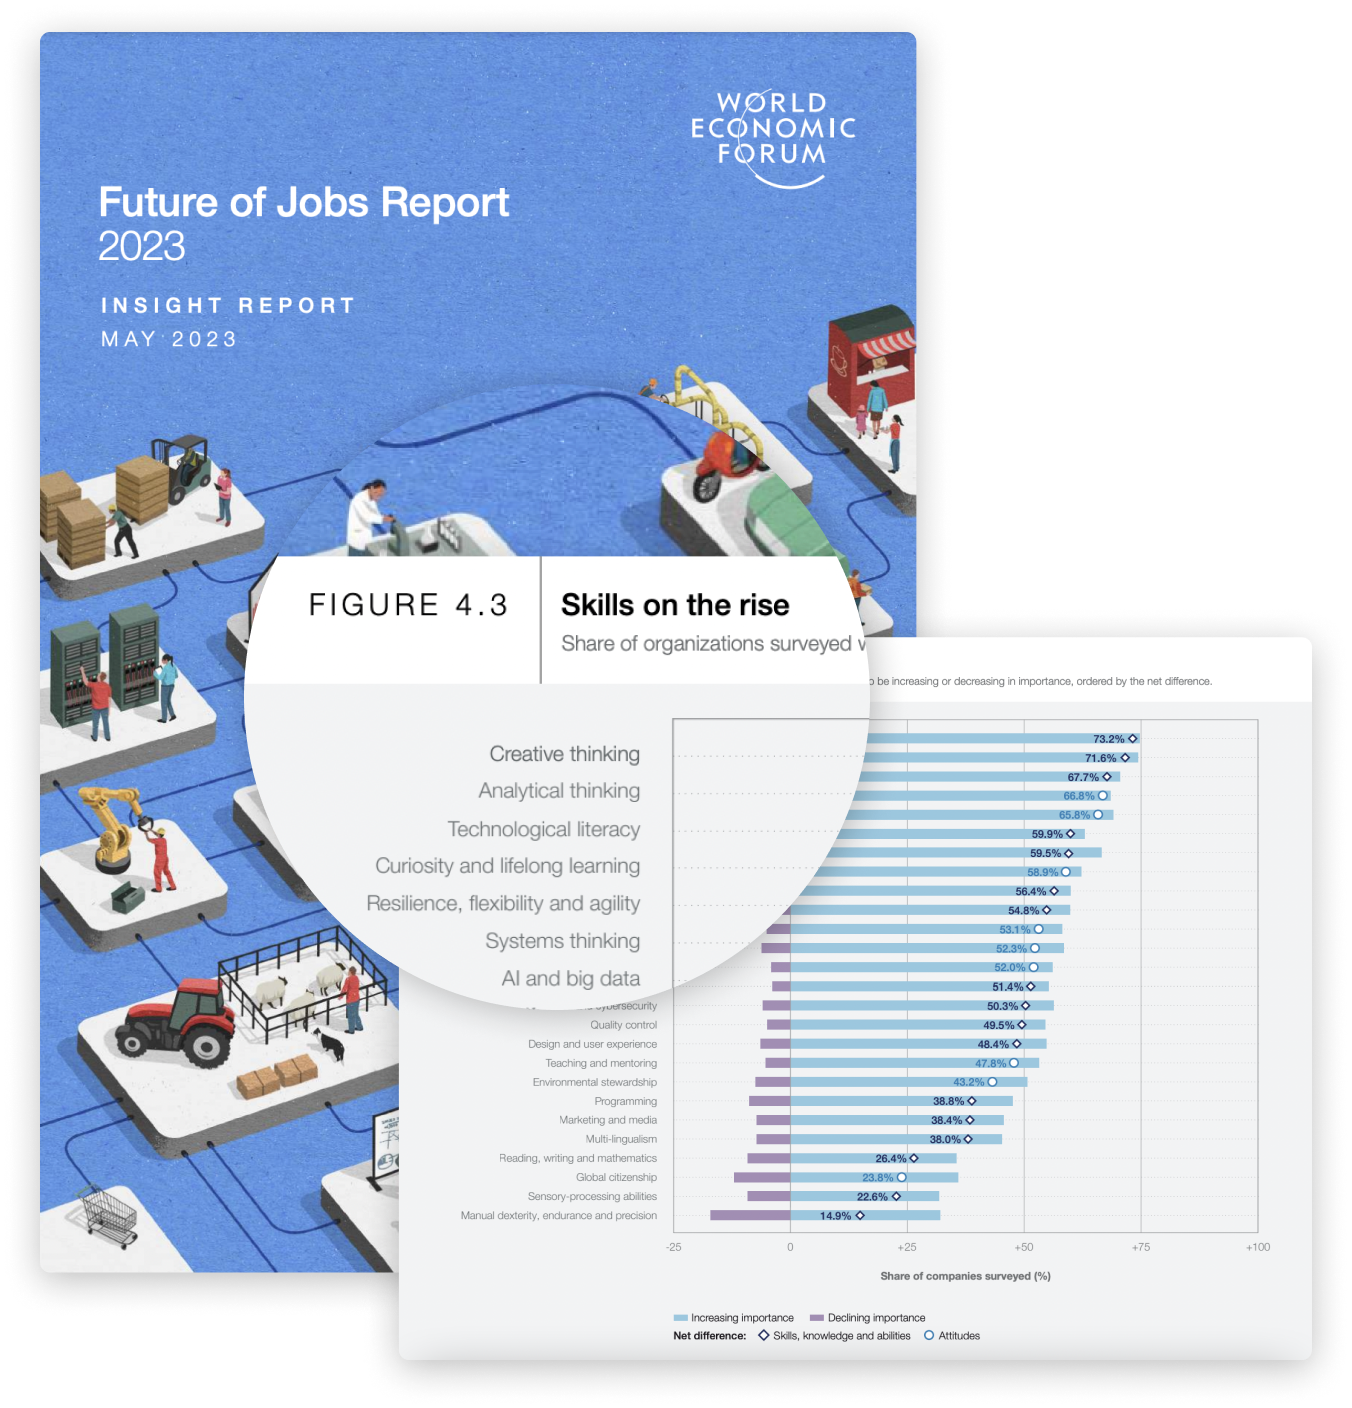 Source: Future of Jobs Report (World Economic Forum, 2023)